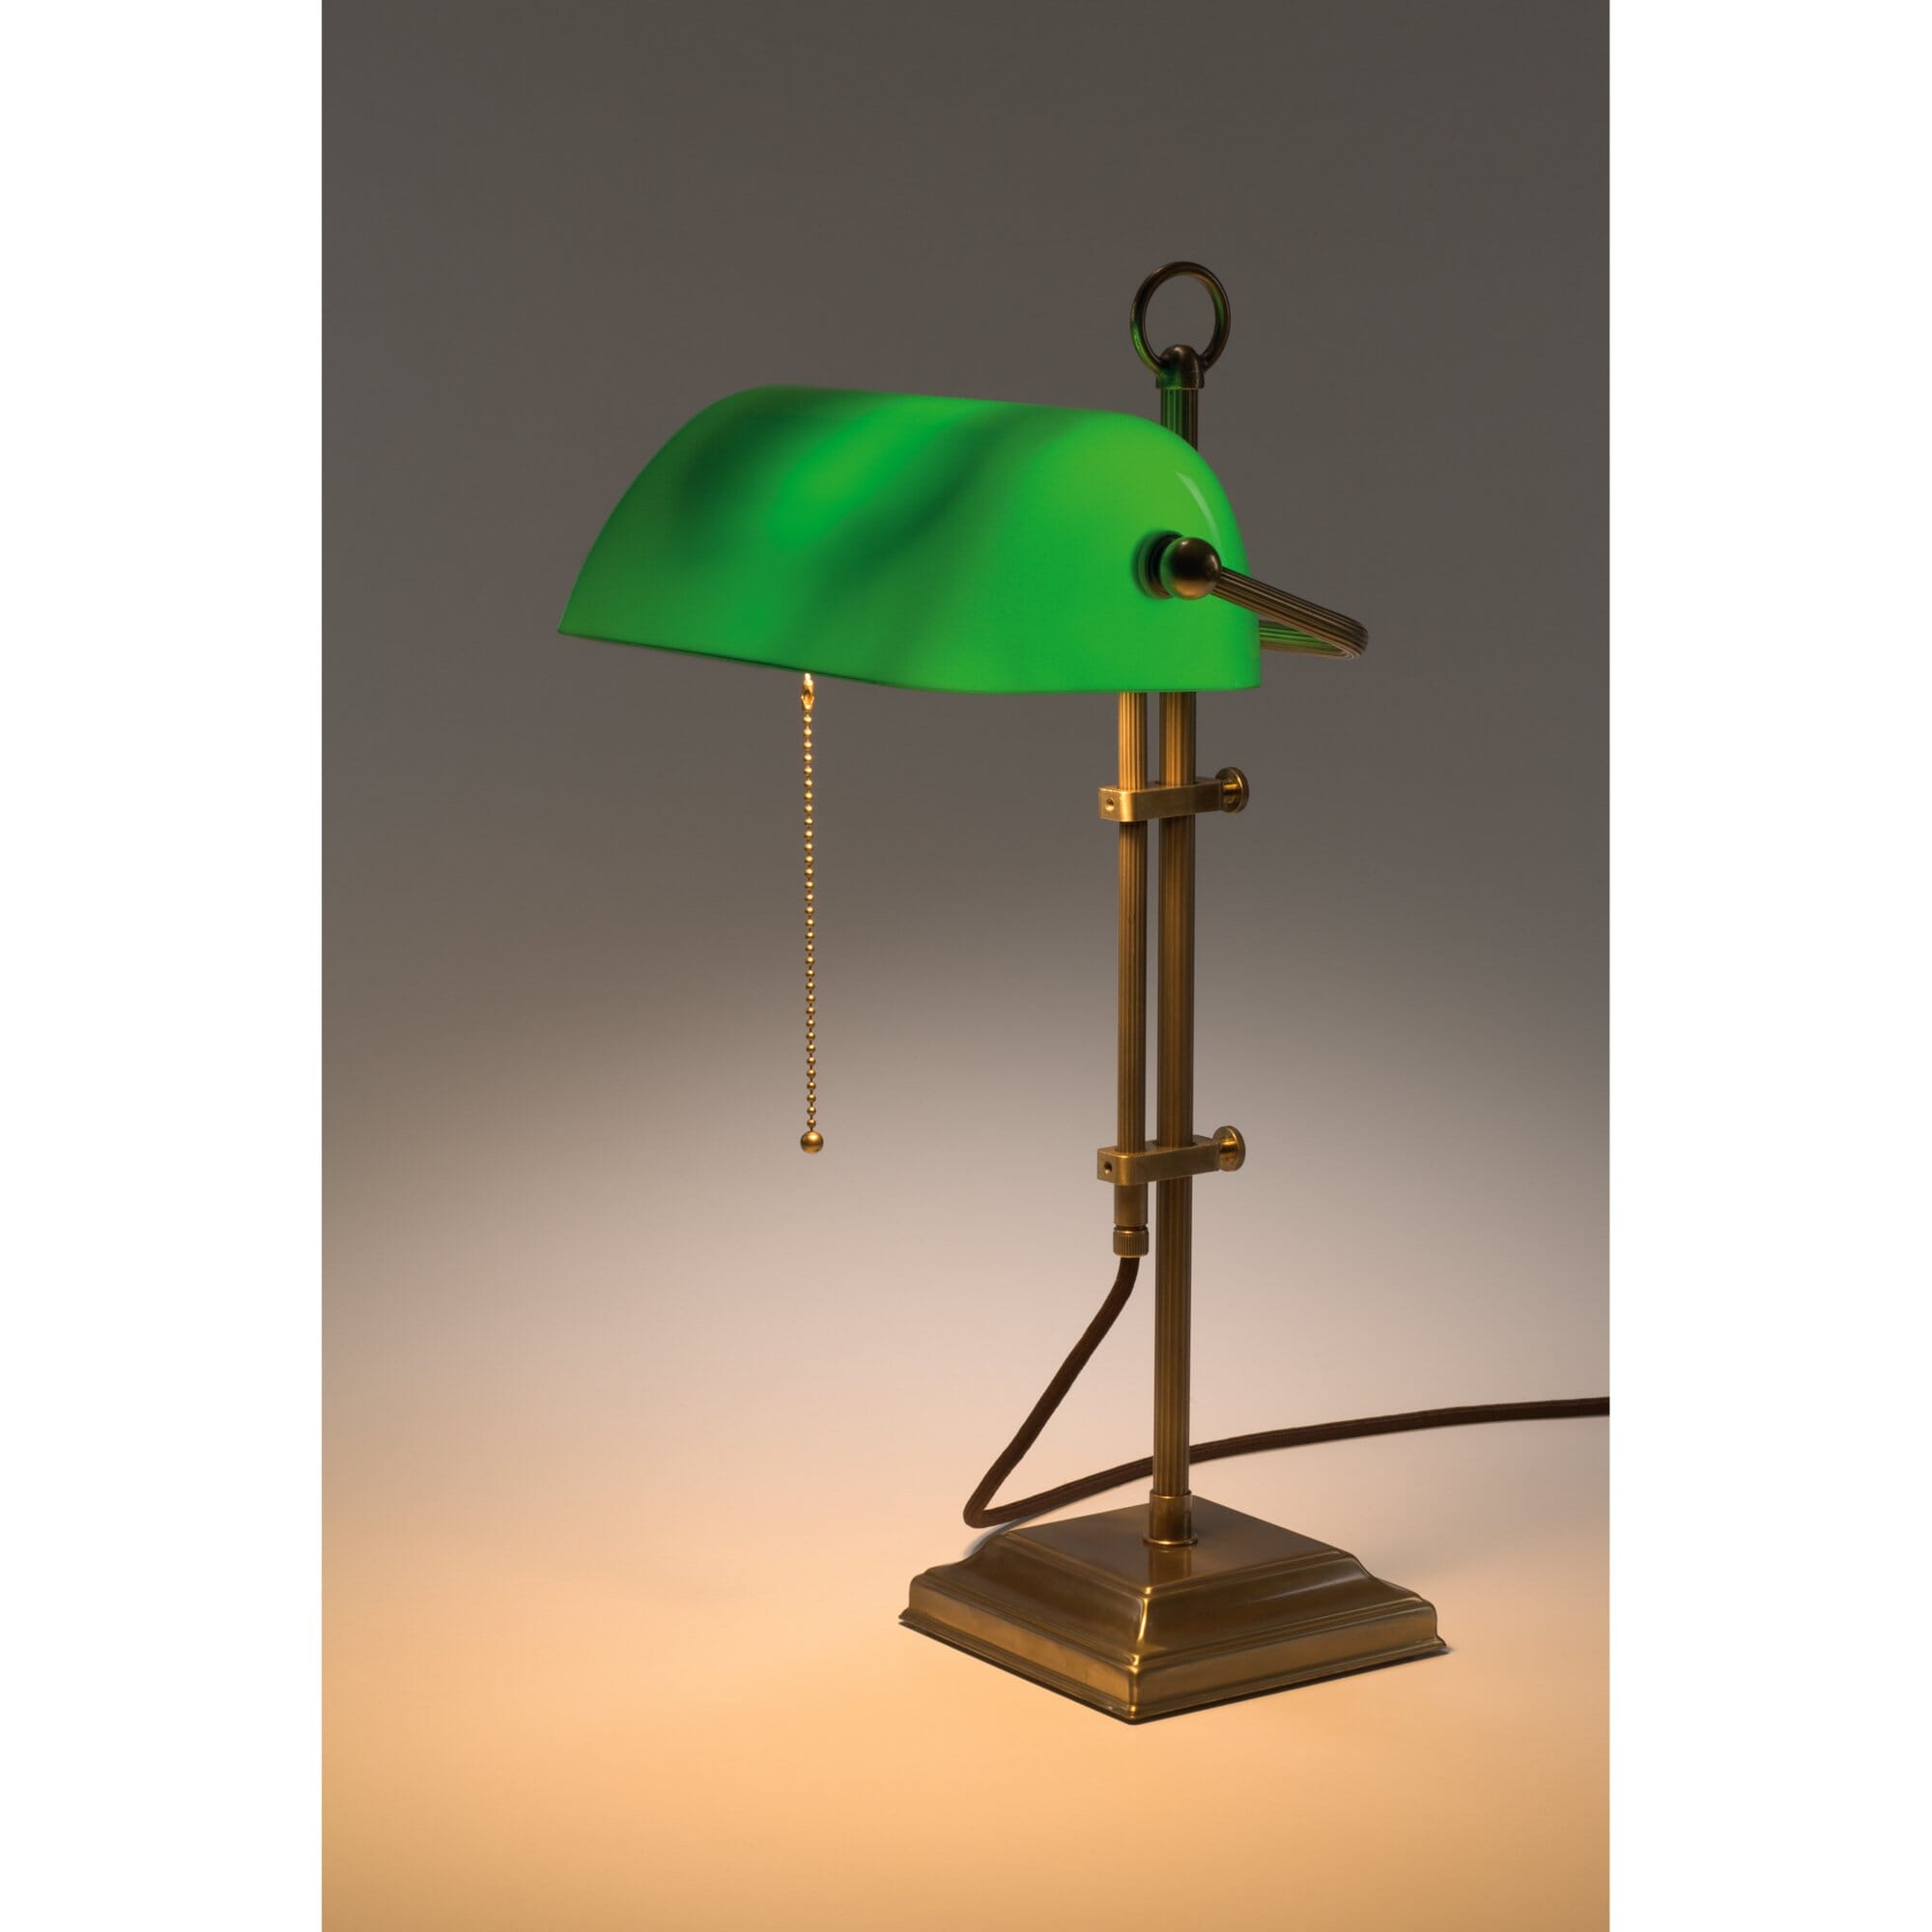 Lampenschirm für Bankerslampe Grün 22,5 cm G4070 Ersatzschirm Banker Lampe 